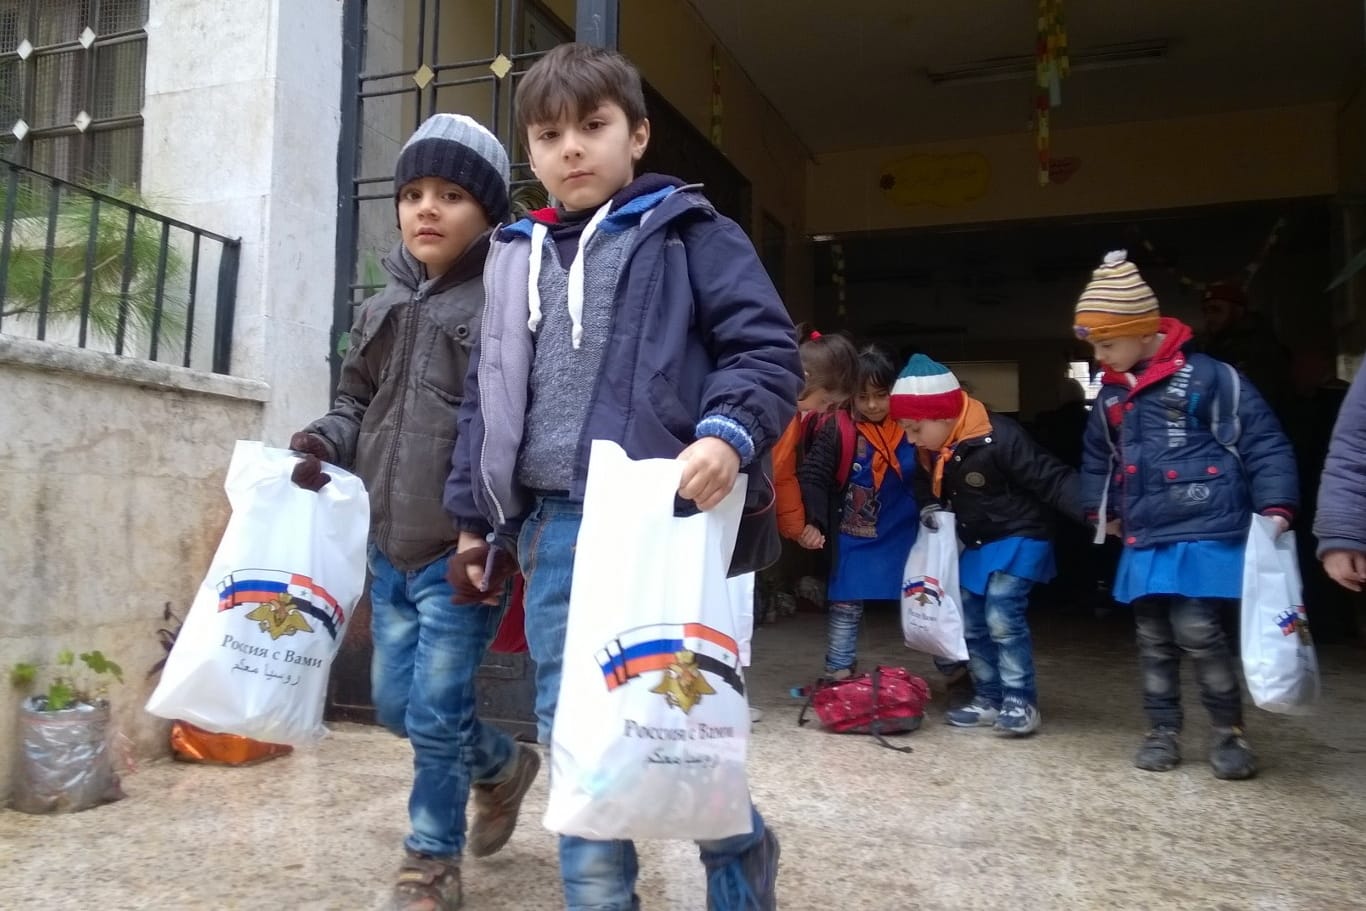 Russian soldiers bring presents to schoolchildren in Aleppo, Syri